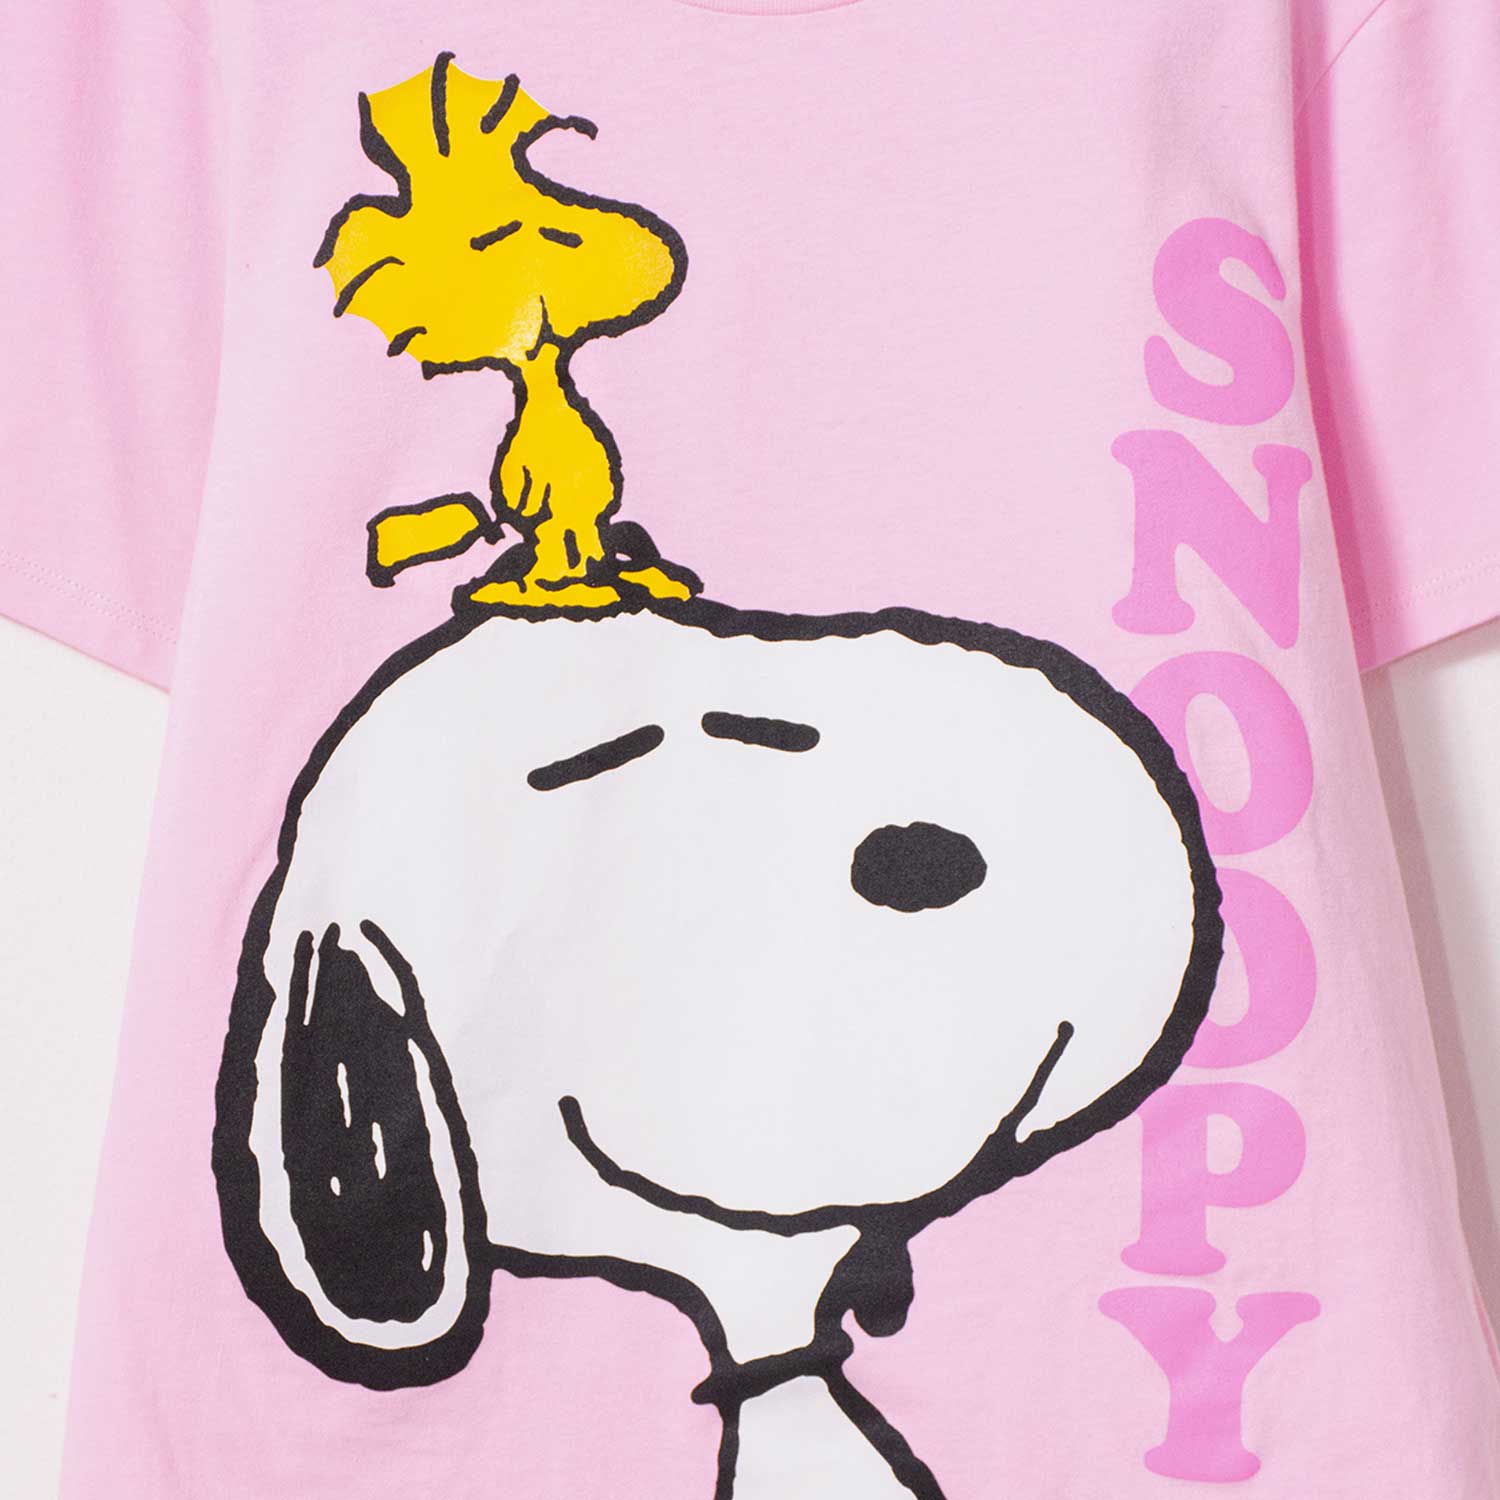 Pijama de Snoopy con pantalón largo rosada para mujer - MoviesShop | Productos